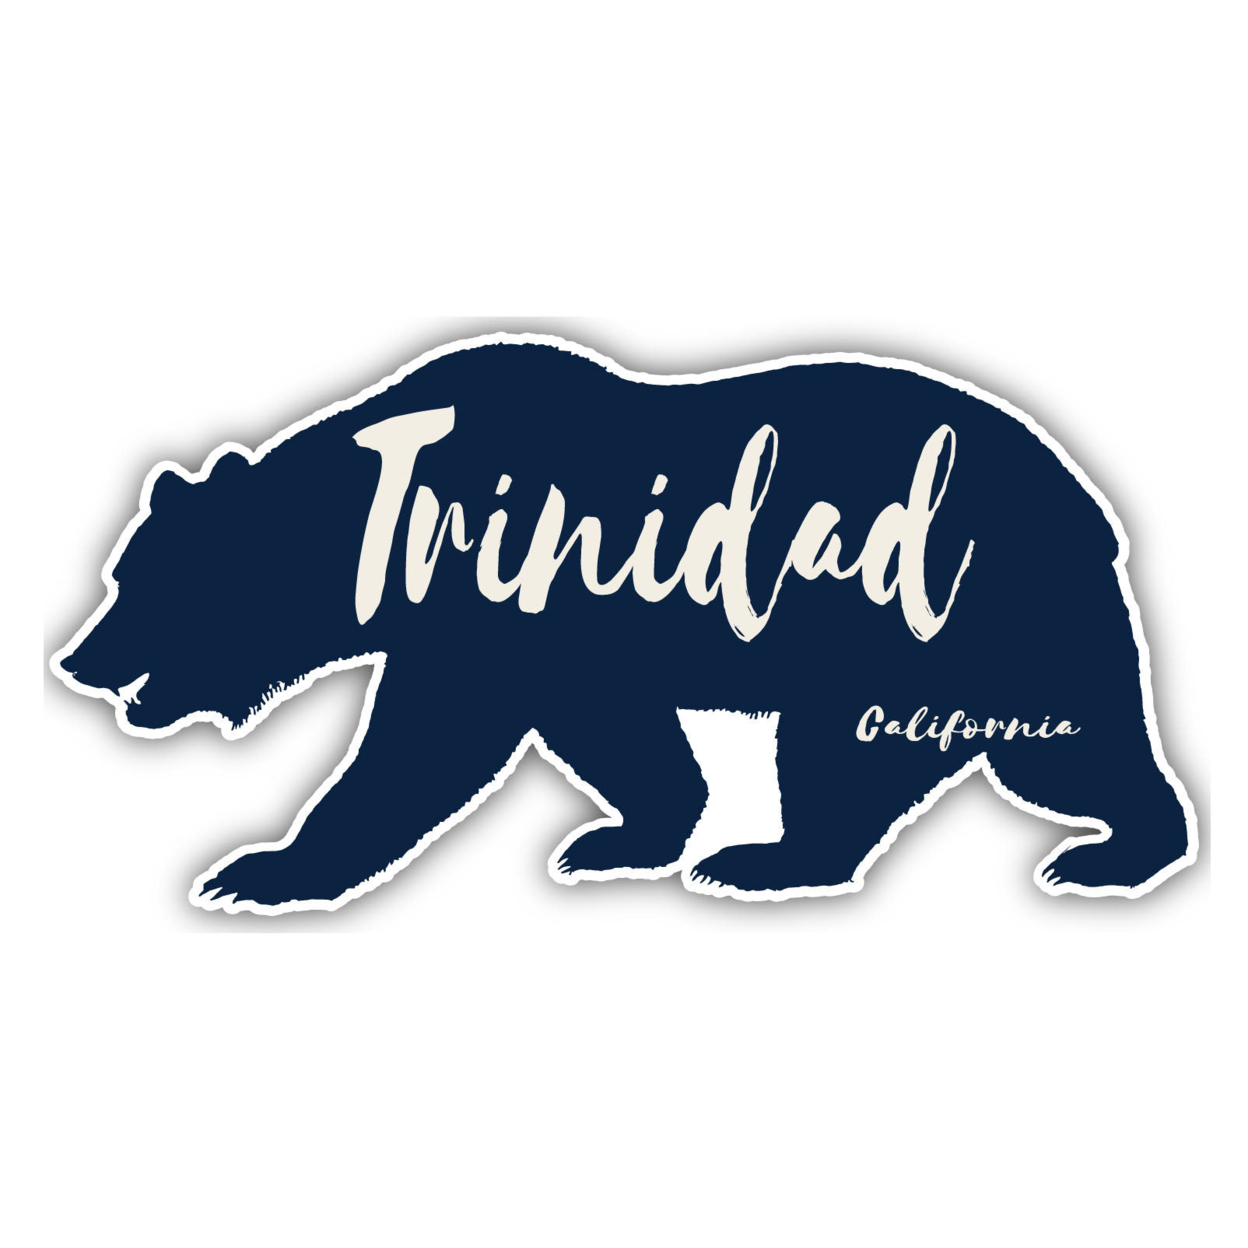 Trinidad California Souvenir Decorative Stickers (Choose Theme And Size) - Single Unit, 4-Inch, Tent